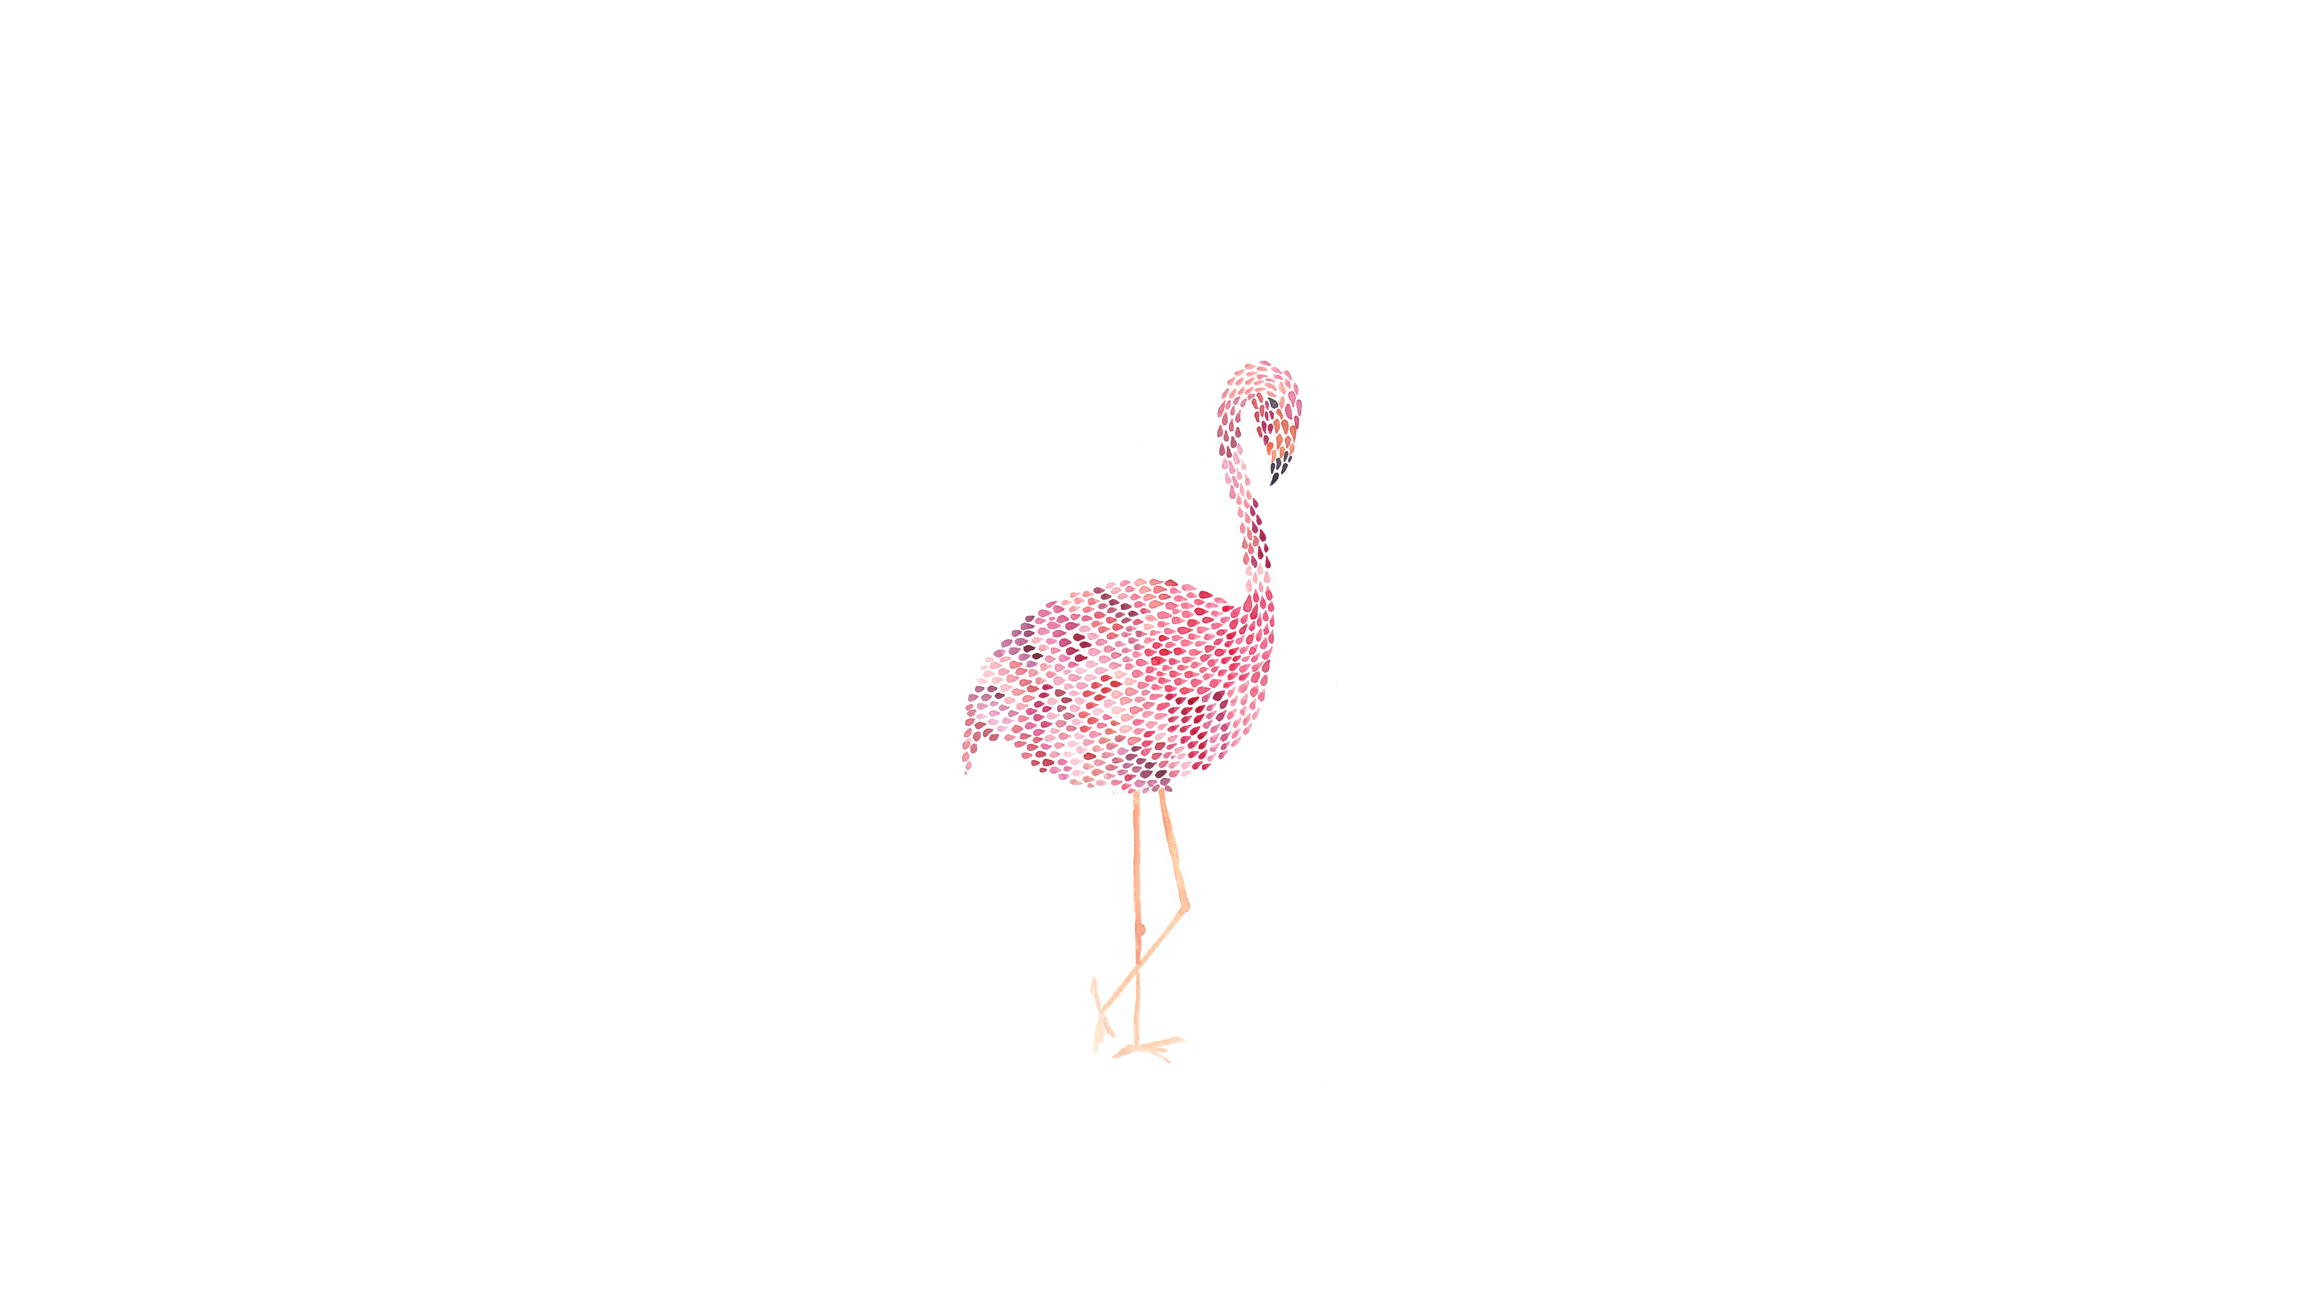  Freude Hintergrundbild 2304x1296. Juni Wallpaper: Flamingo Love Handmade